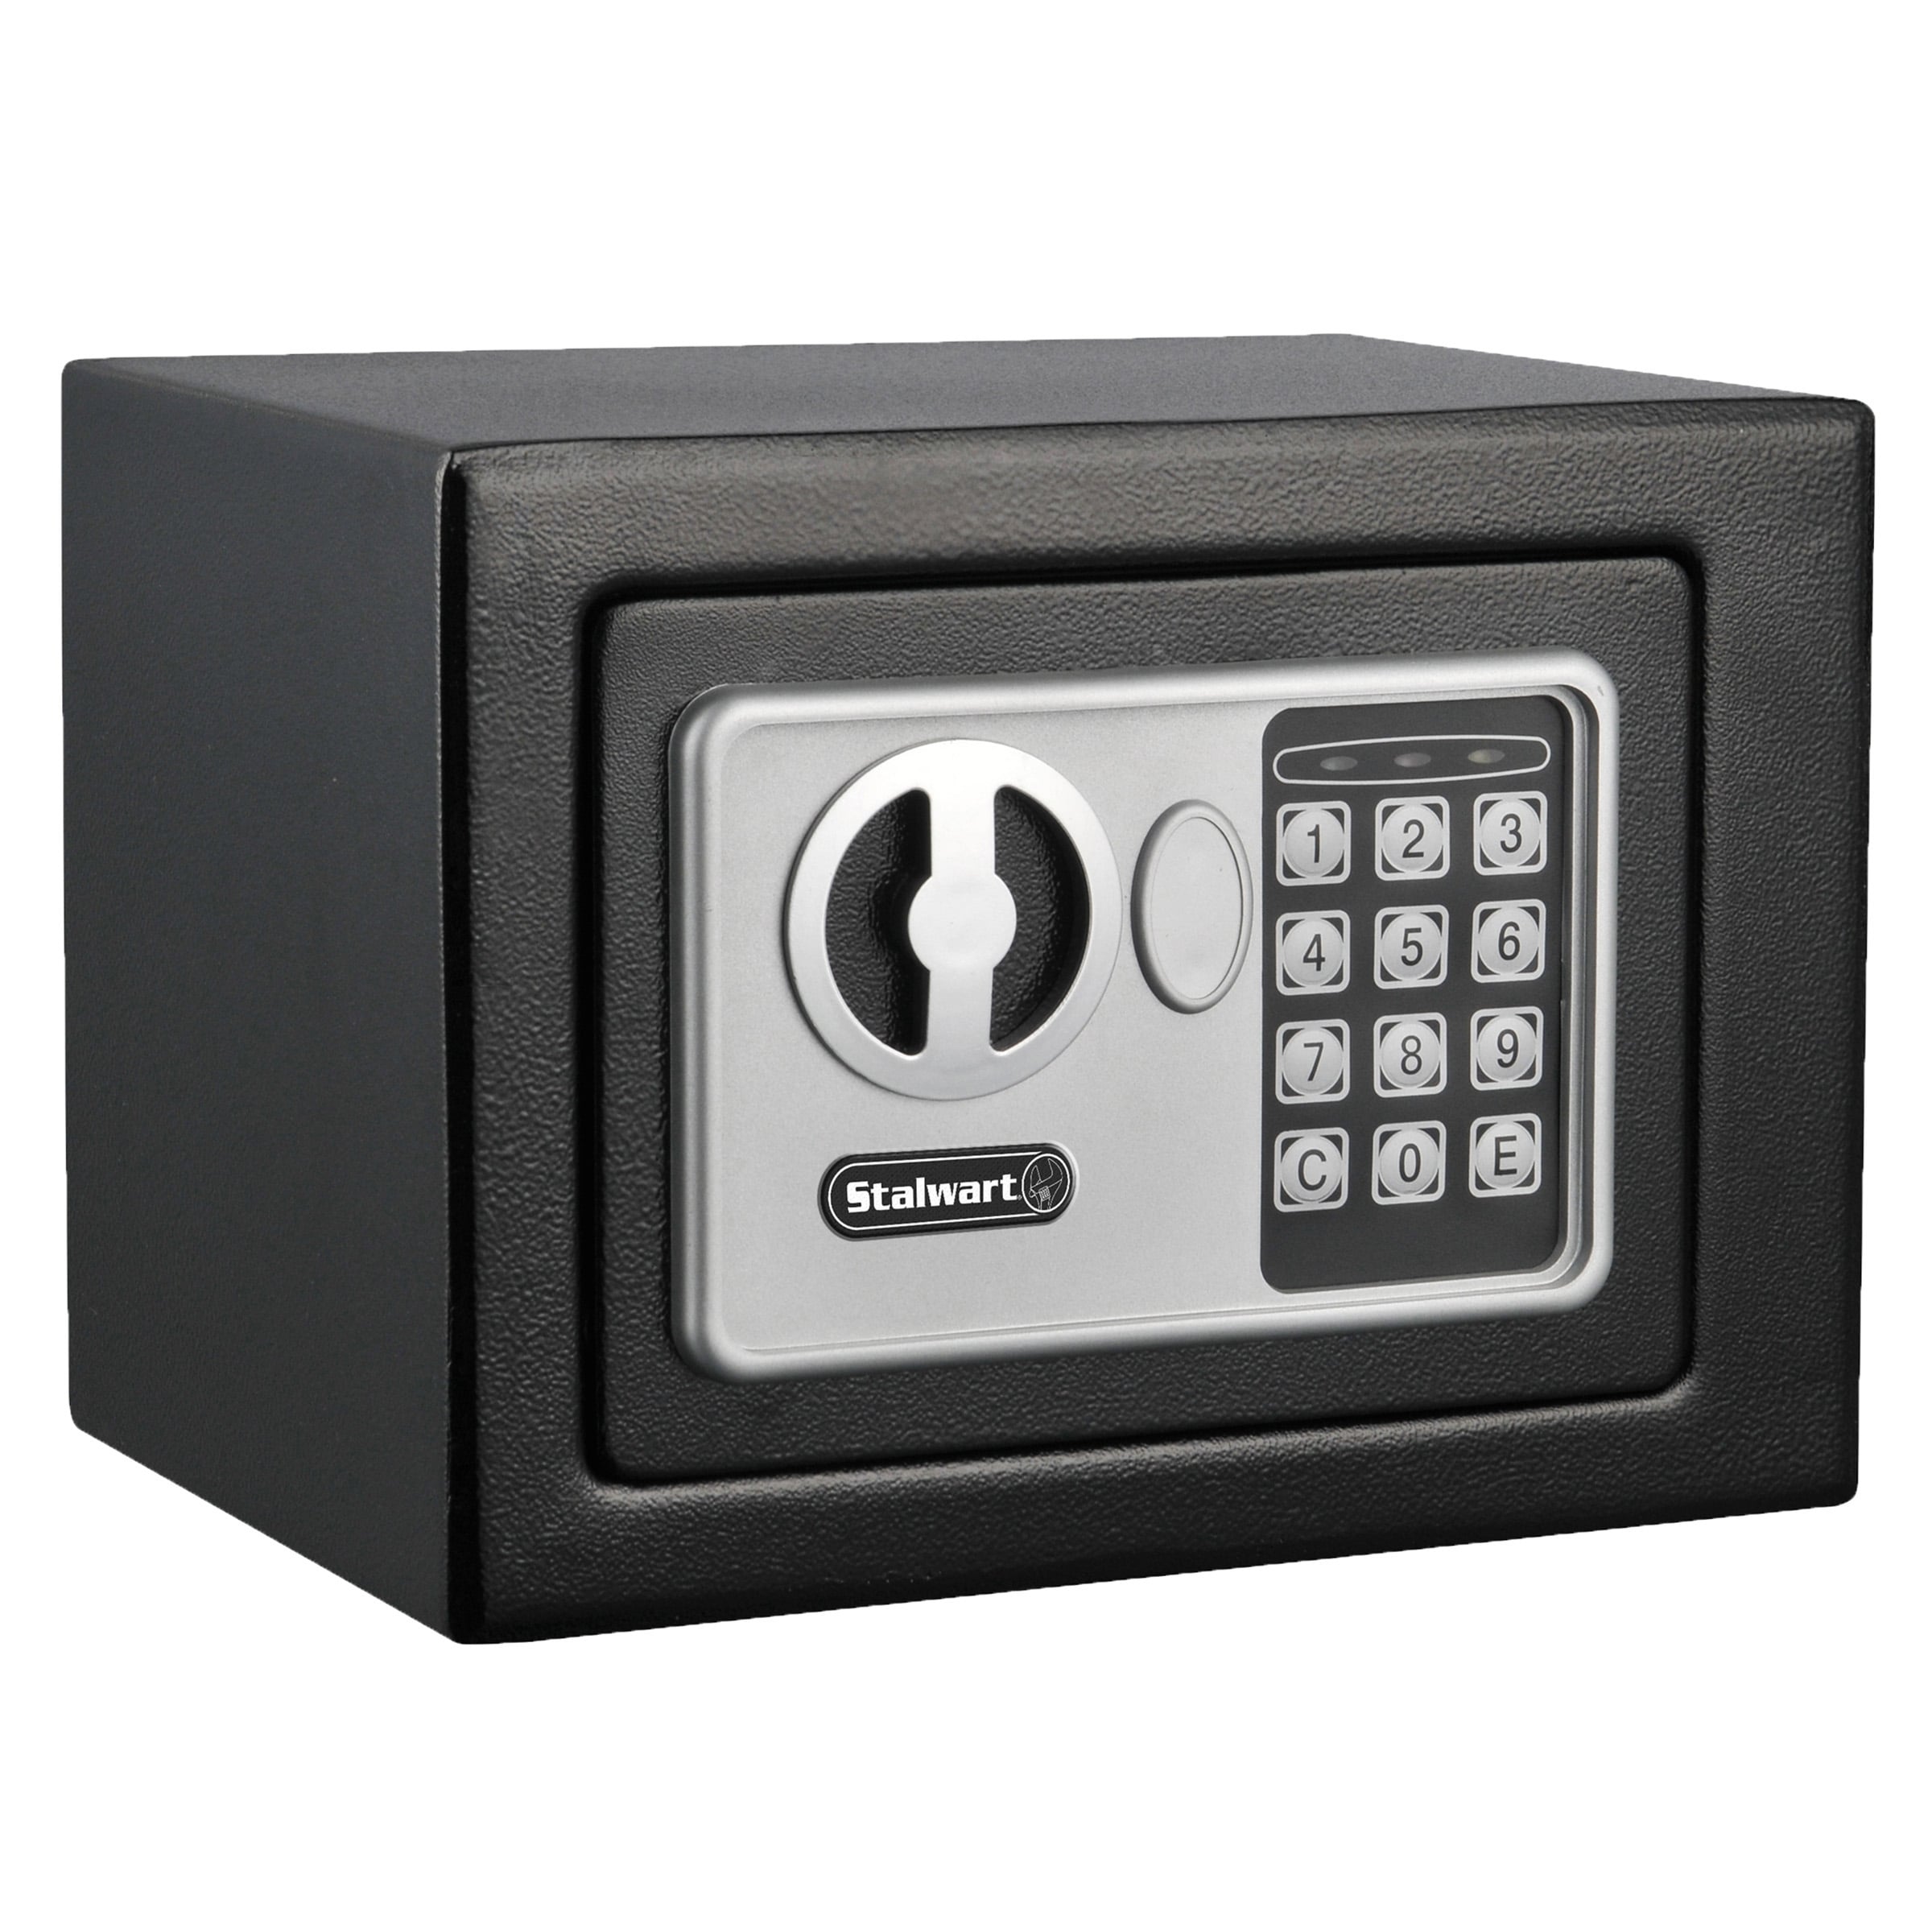 Digital Steel Safe Electronic Security Home Office Money Cash Safety Box Black 